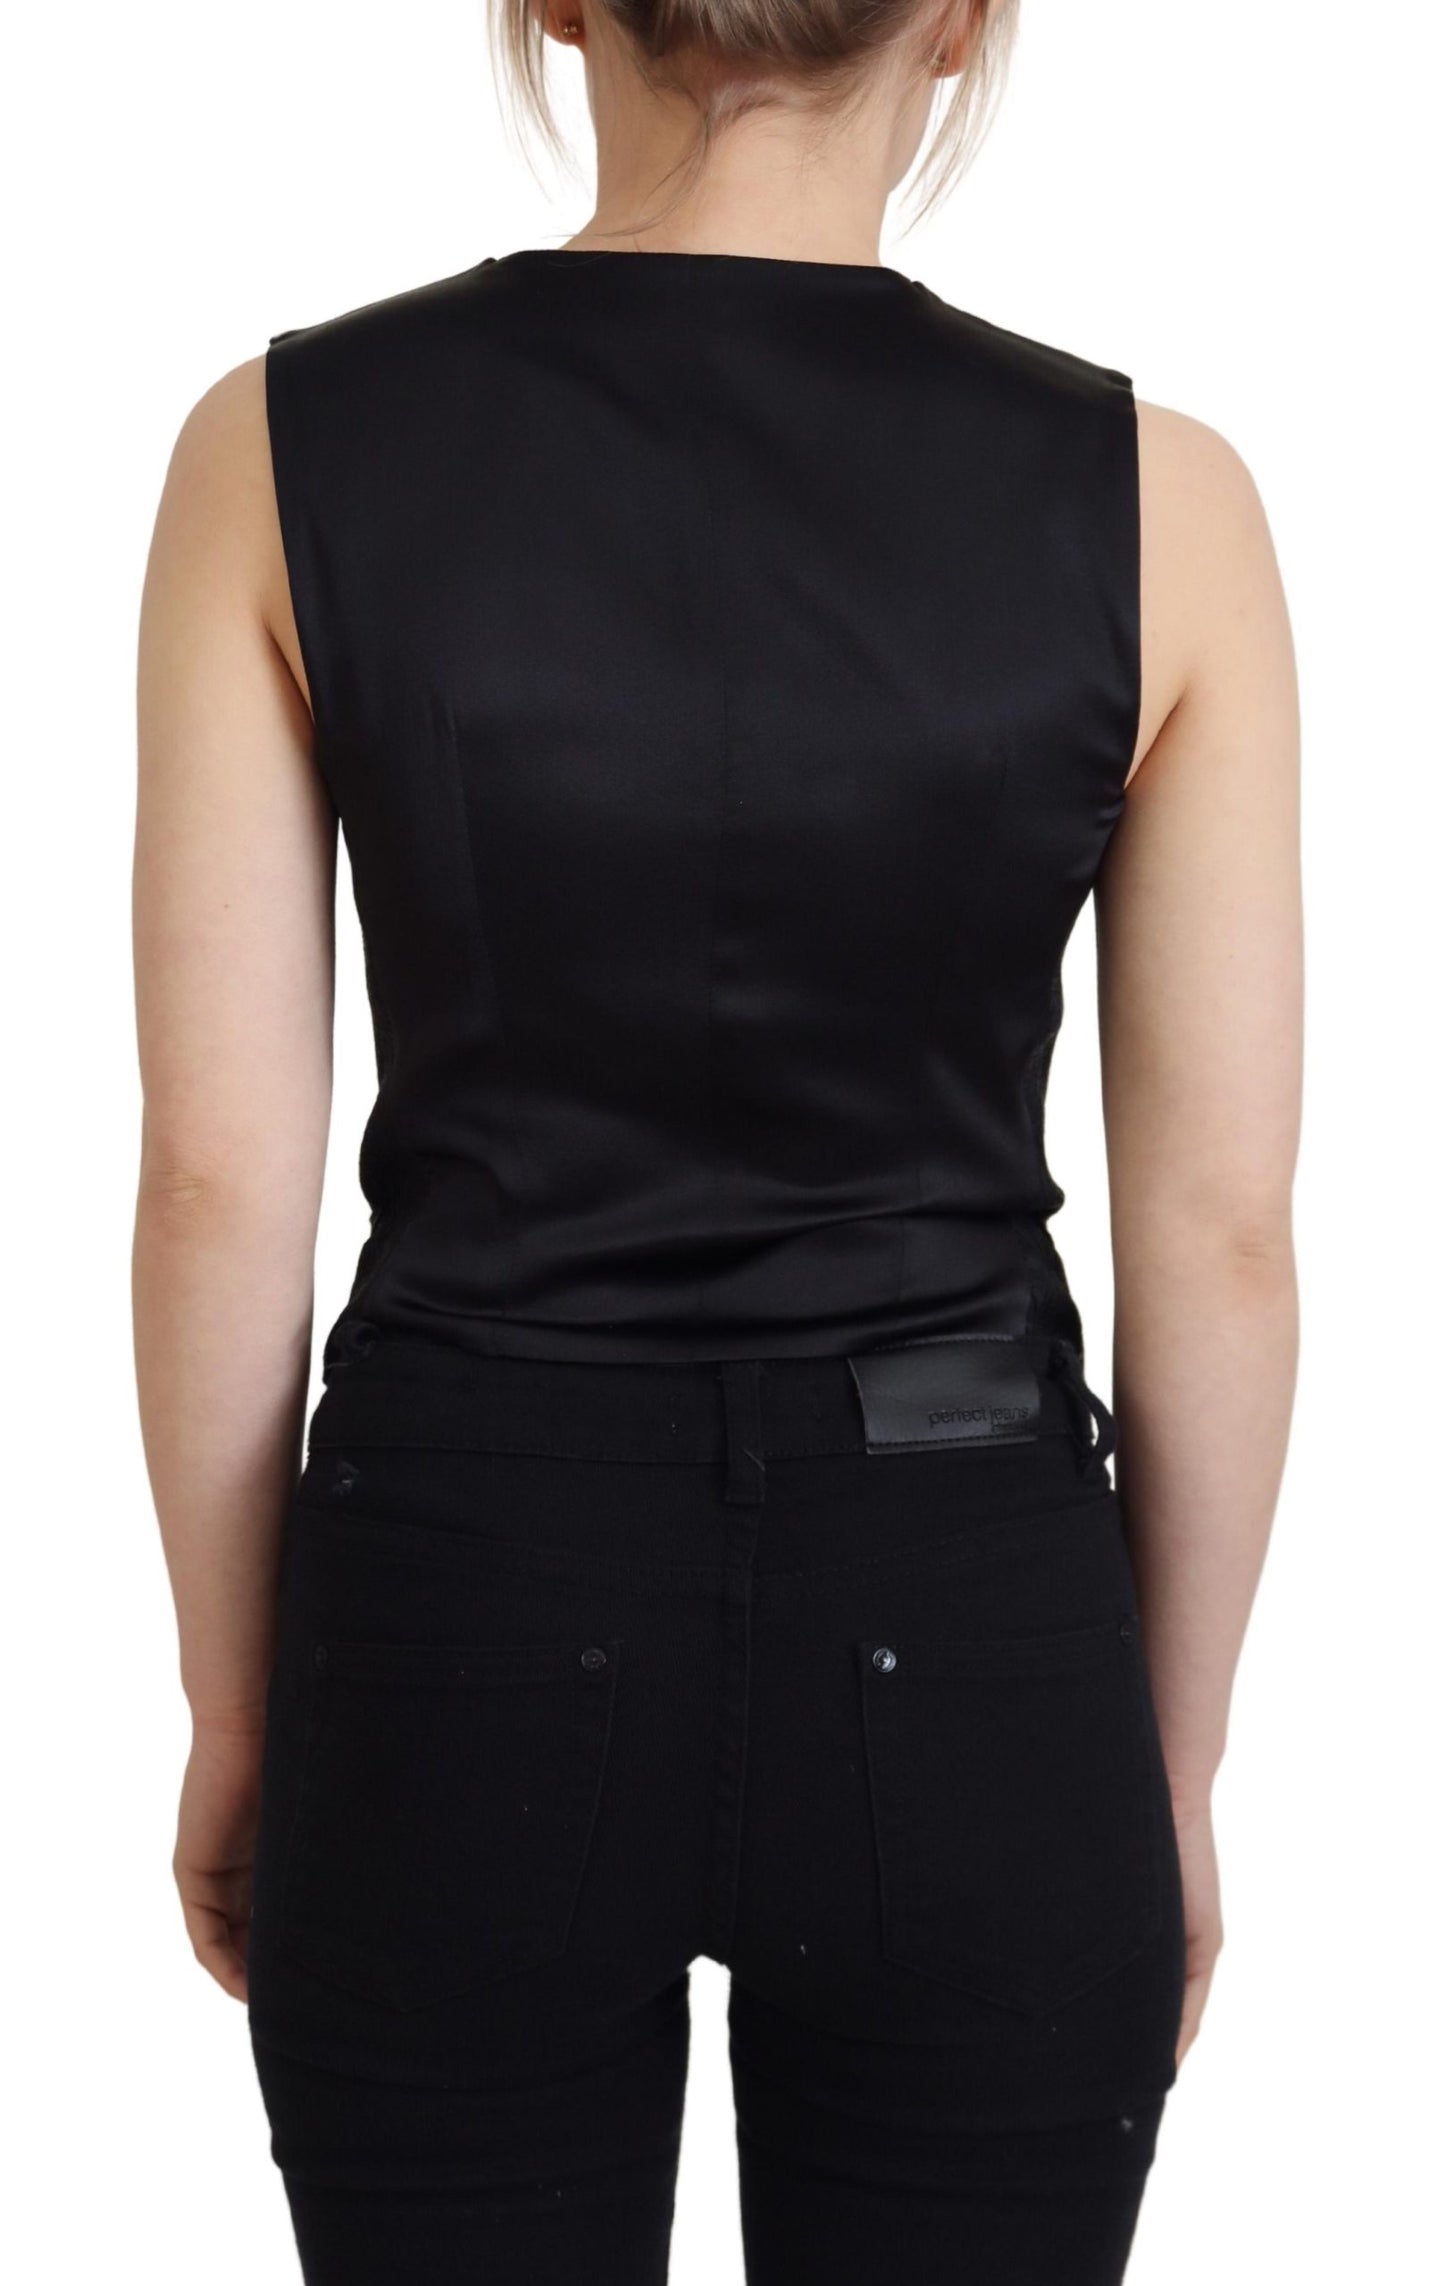 Elegant Black Silk Blend Waistcoat Vest